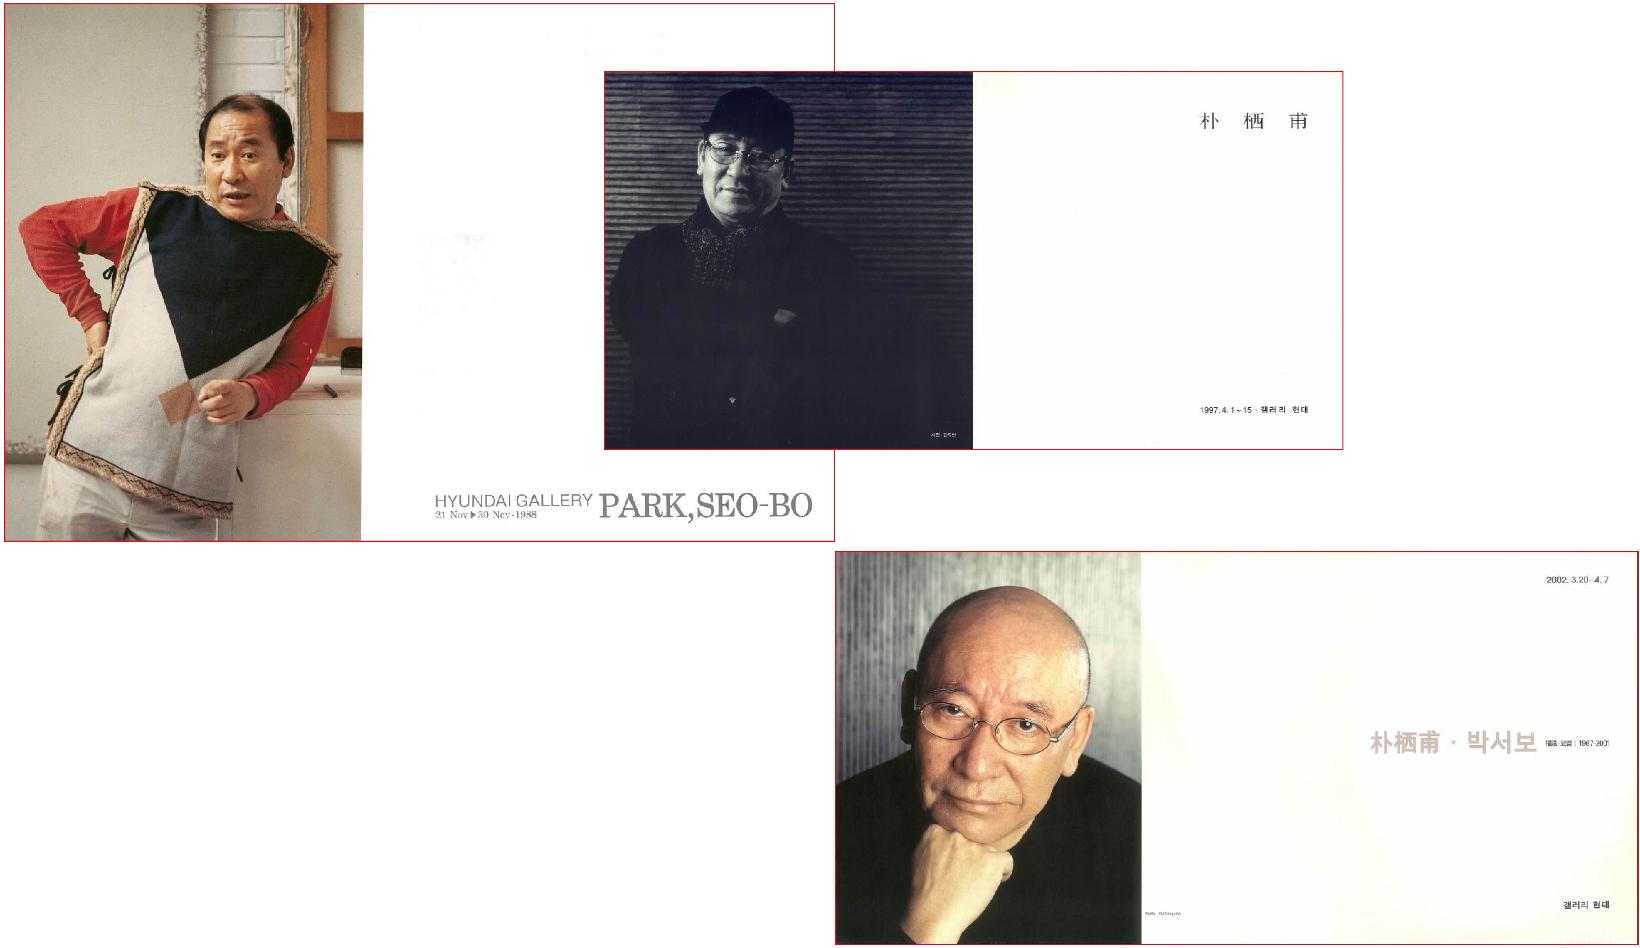 Paris] Park Seo-Bo(박서보) 'Ecriture' - 아트조선 - 아트뉴스 > Exhibition